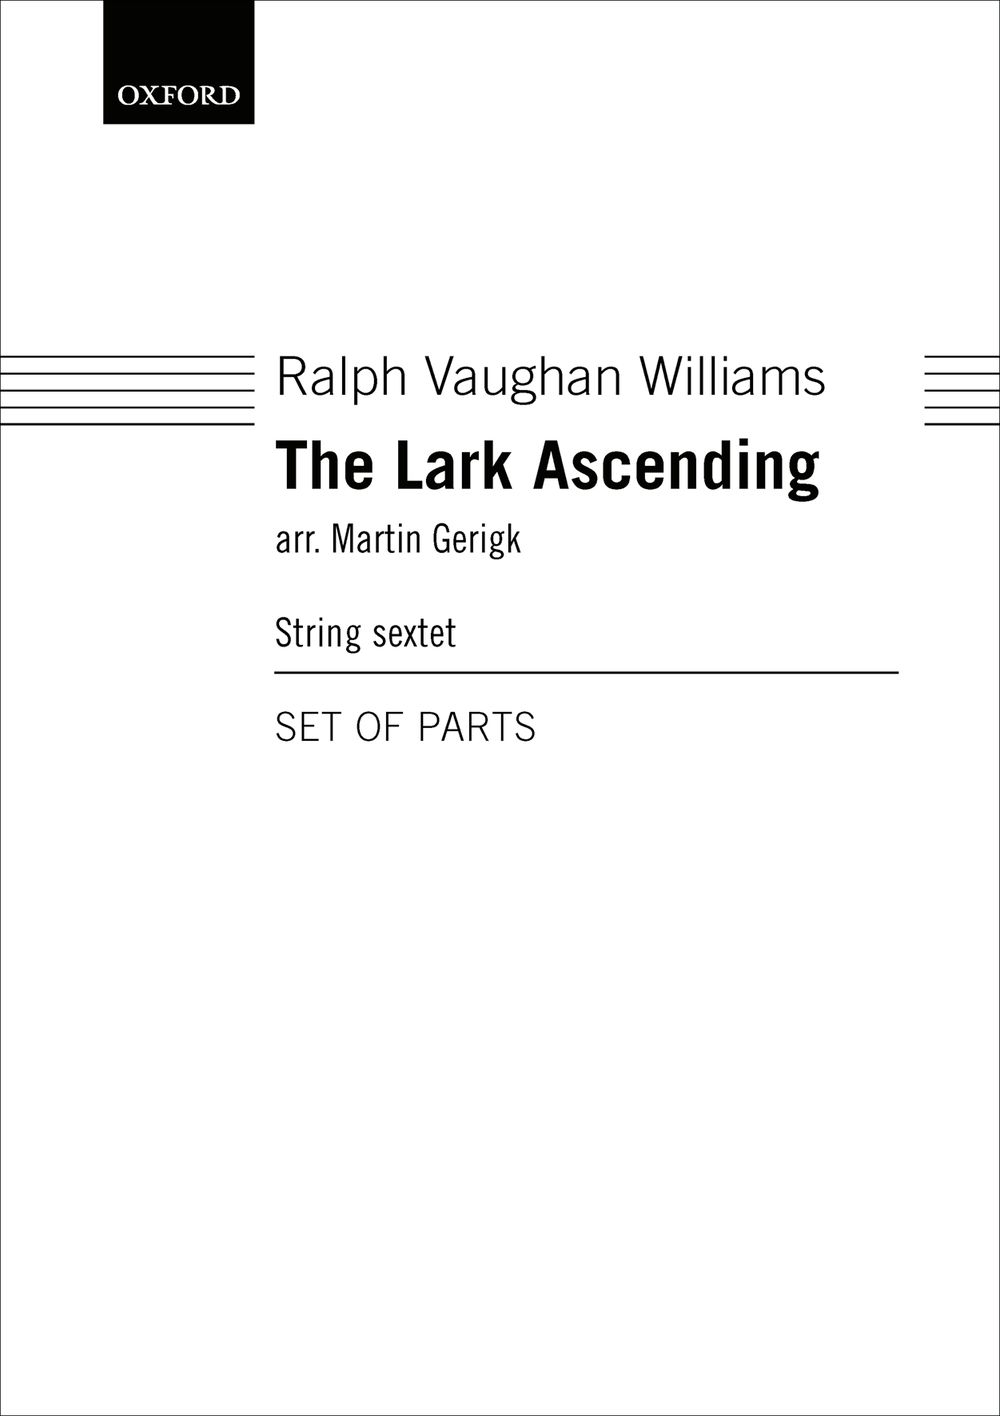 Ralph Vaughan Williams: The Lark Ascending: Parts